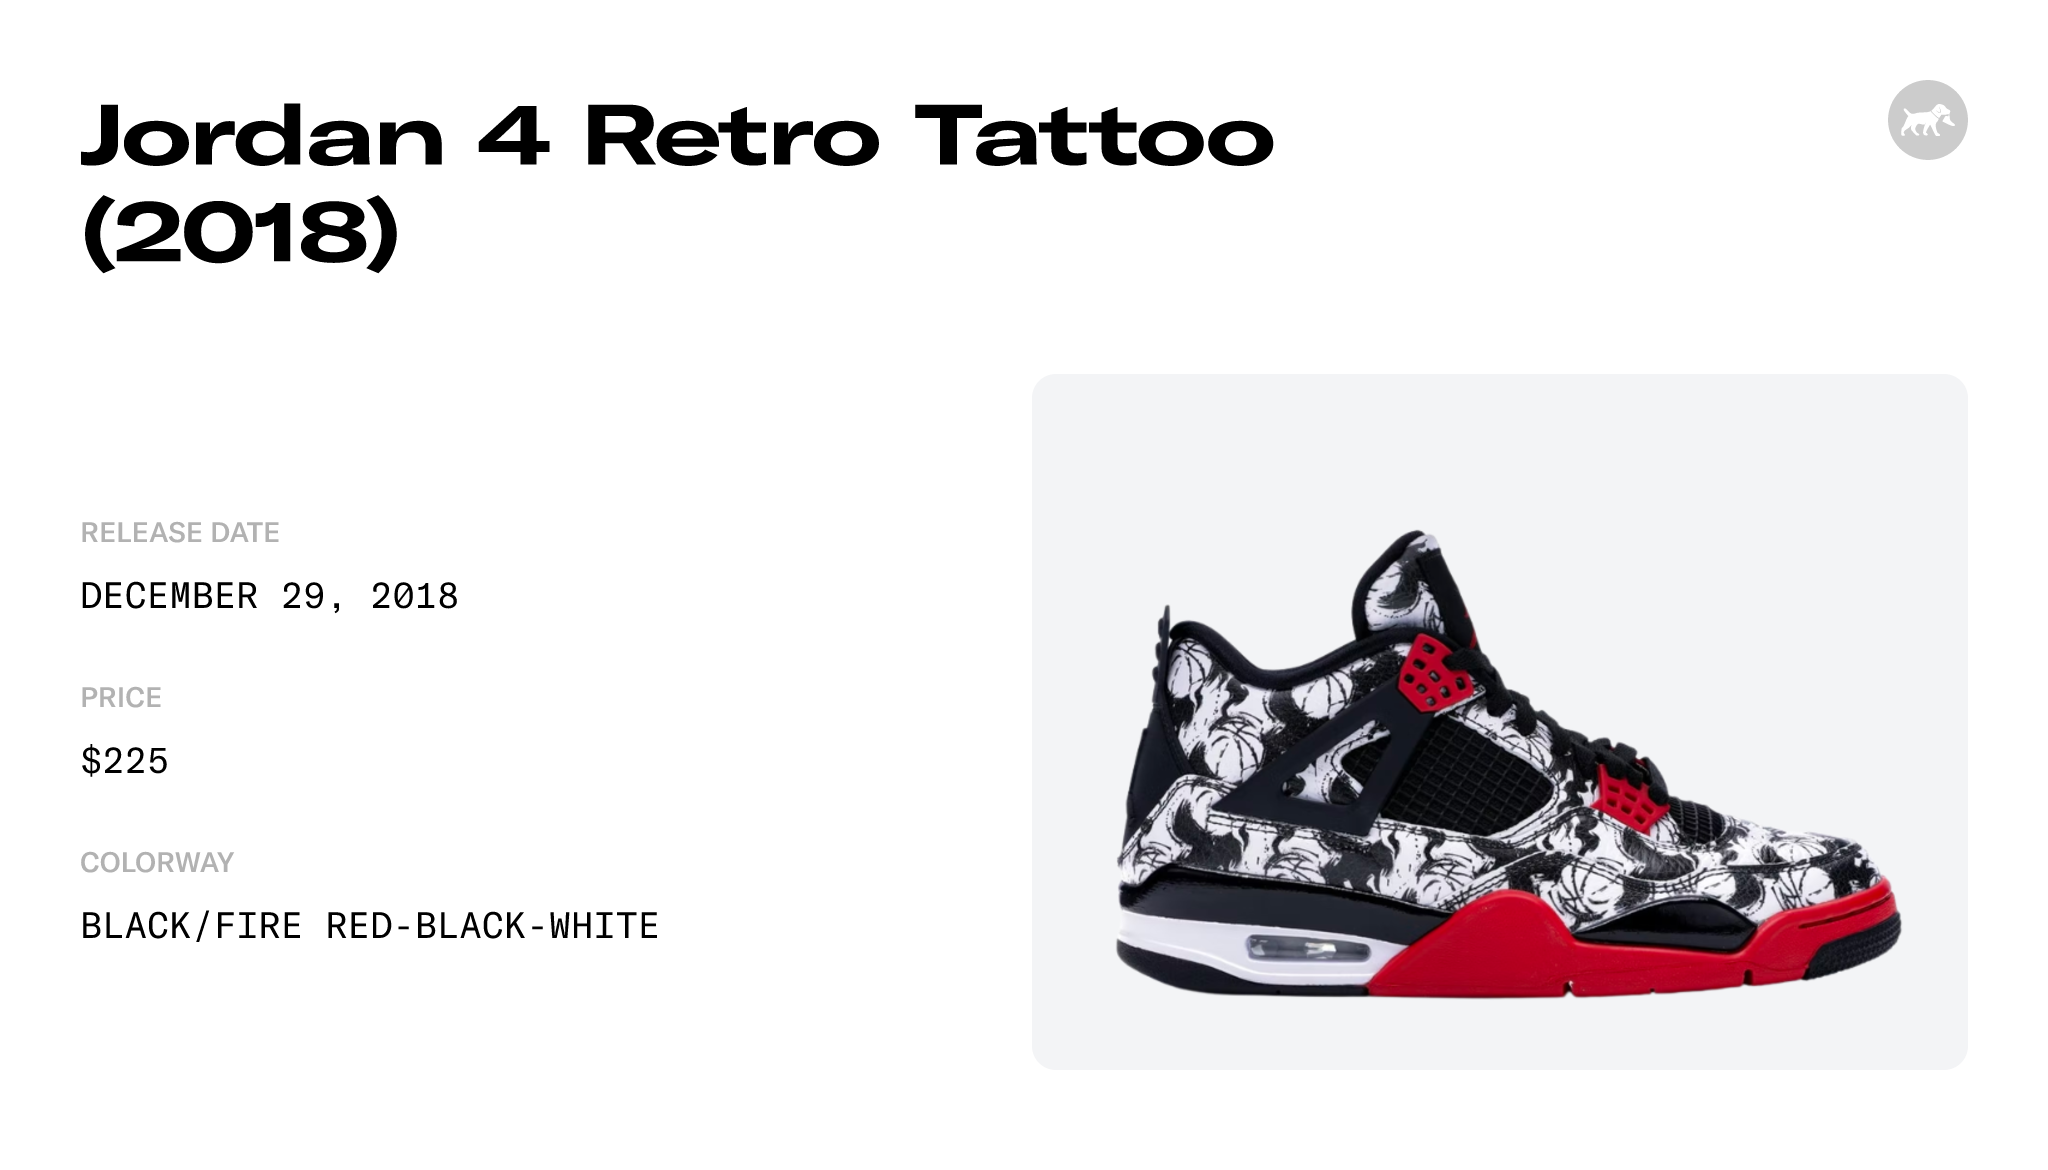 Jordan 4 Retro Tattoo (2018) - BQ0897-006 Raffles and Release Date